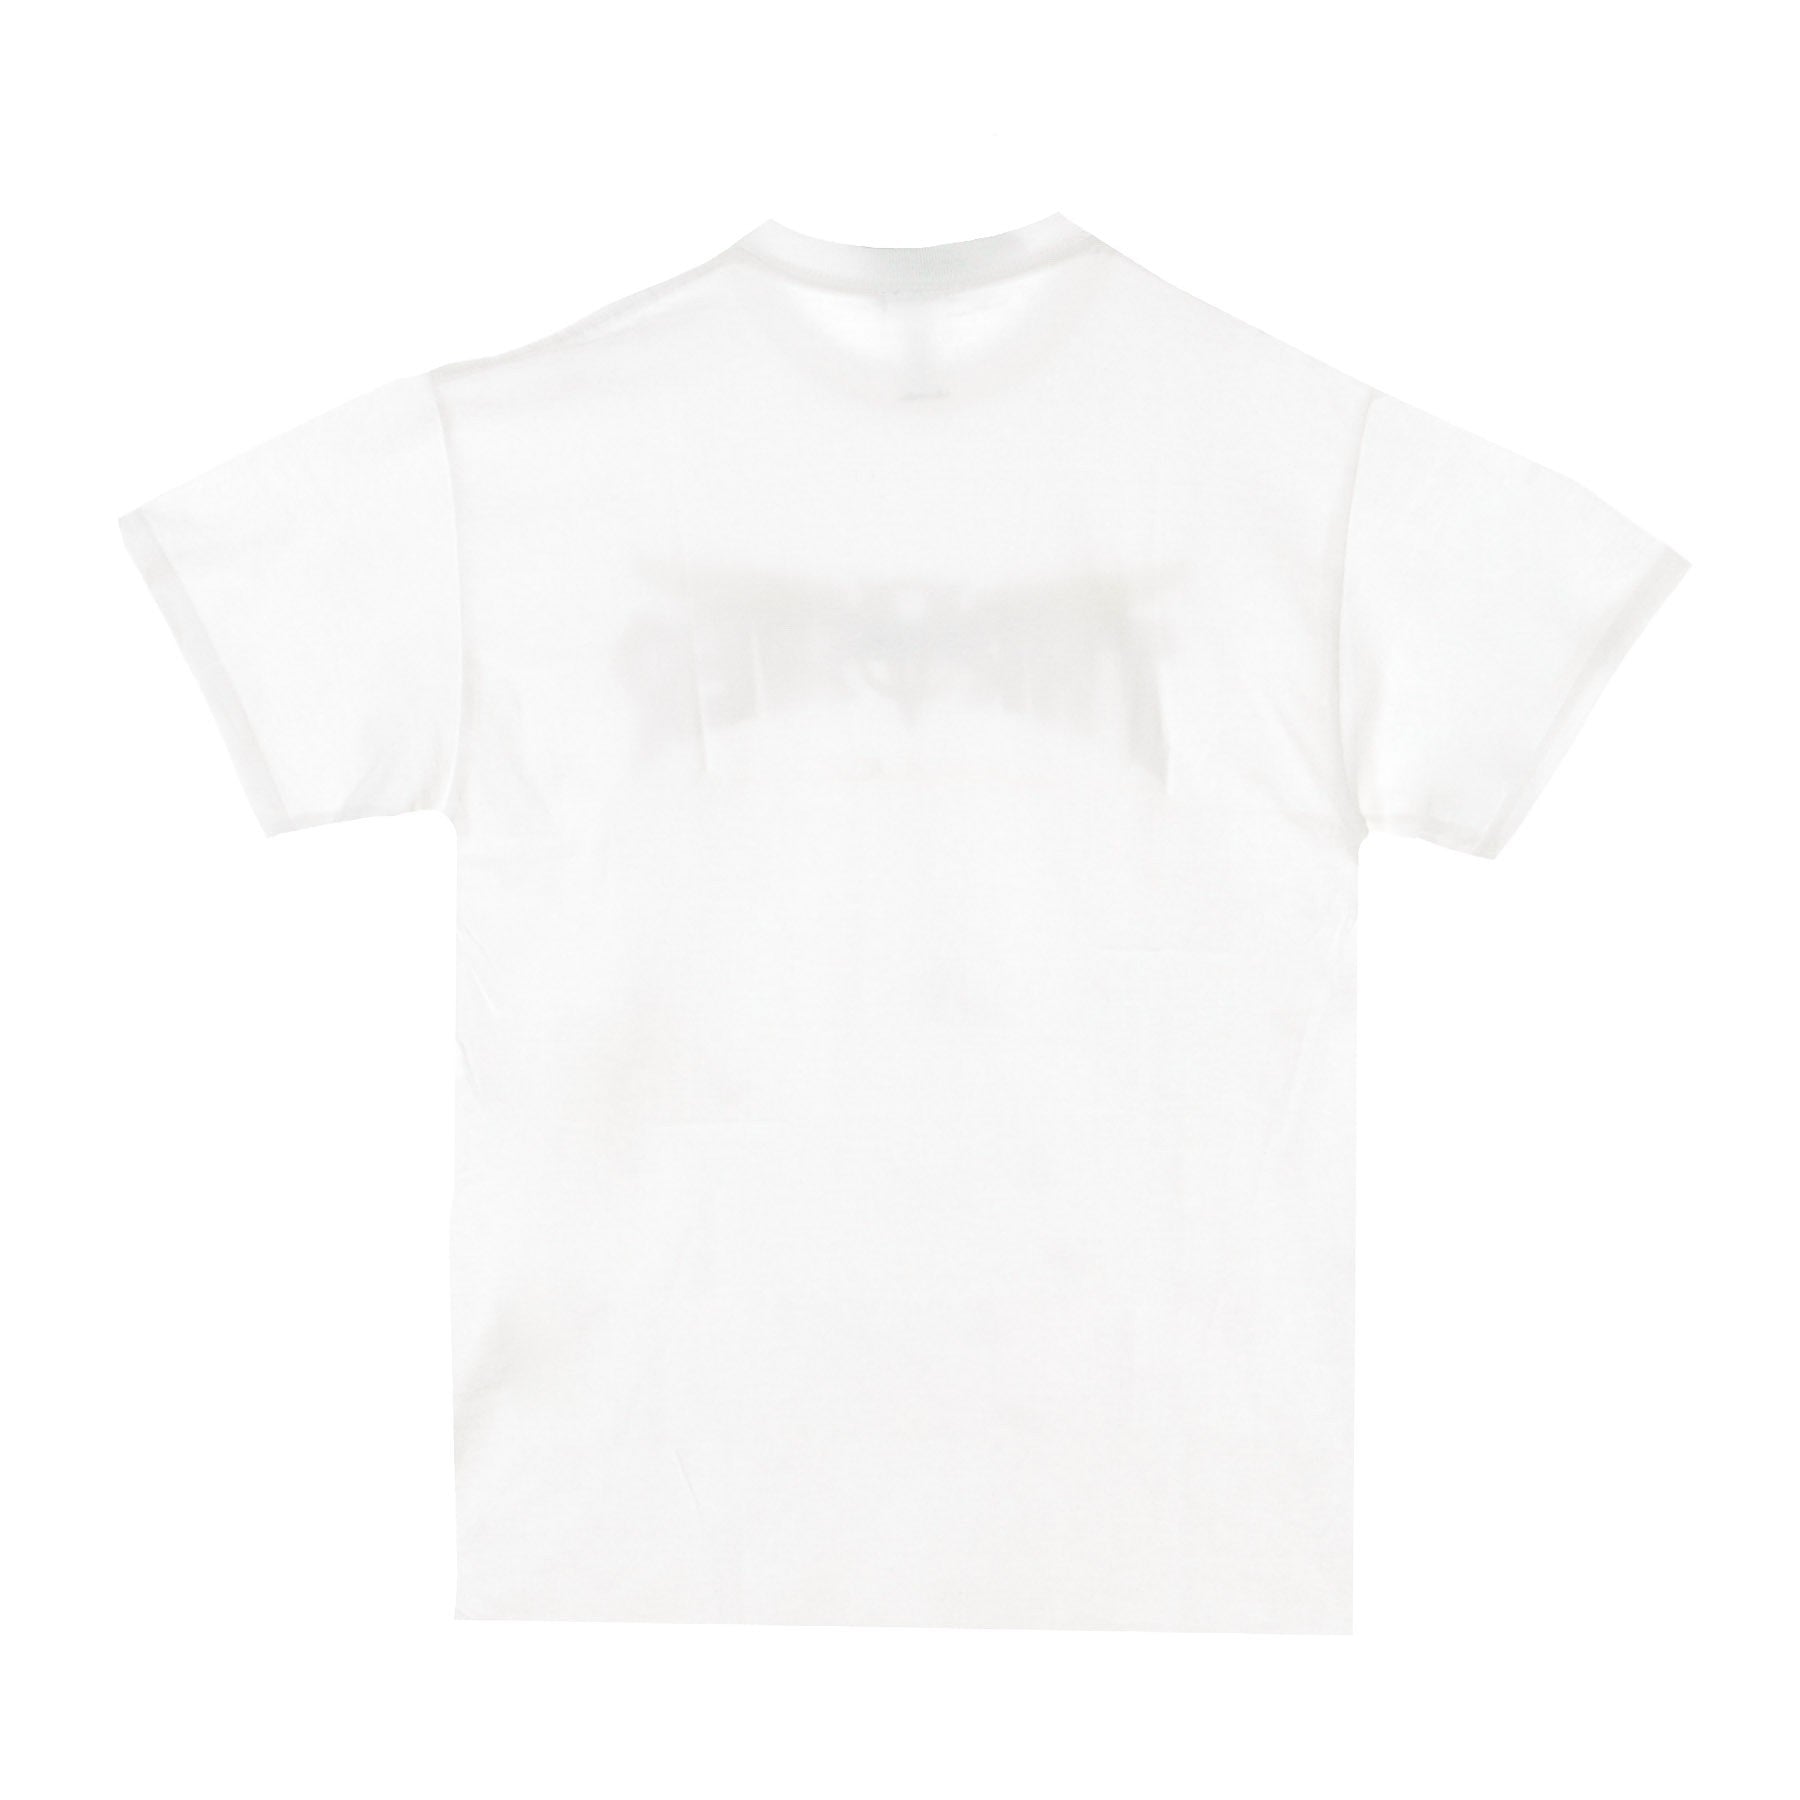 Venture Collab Men's T-Shirt Tee White